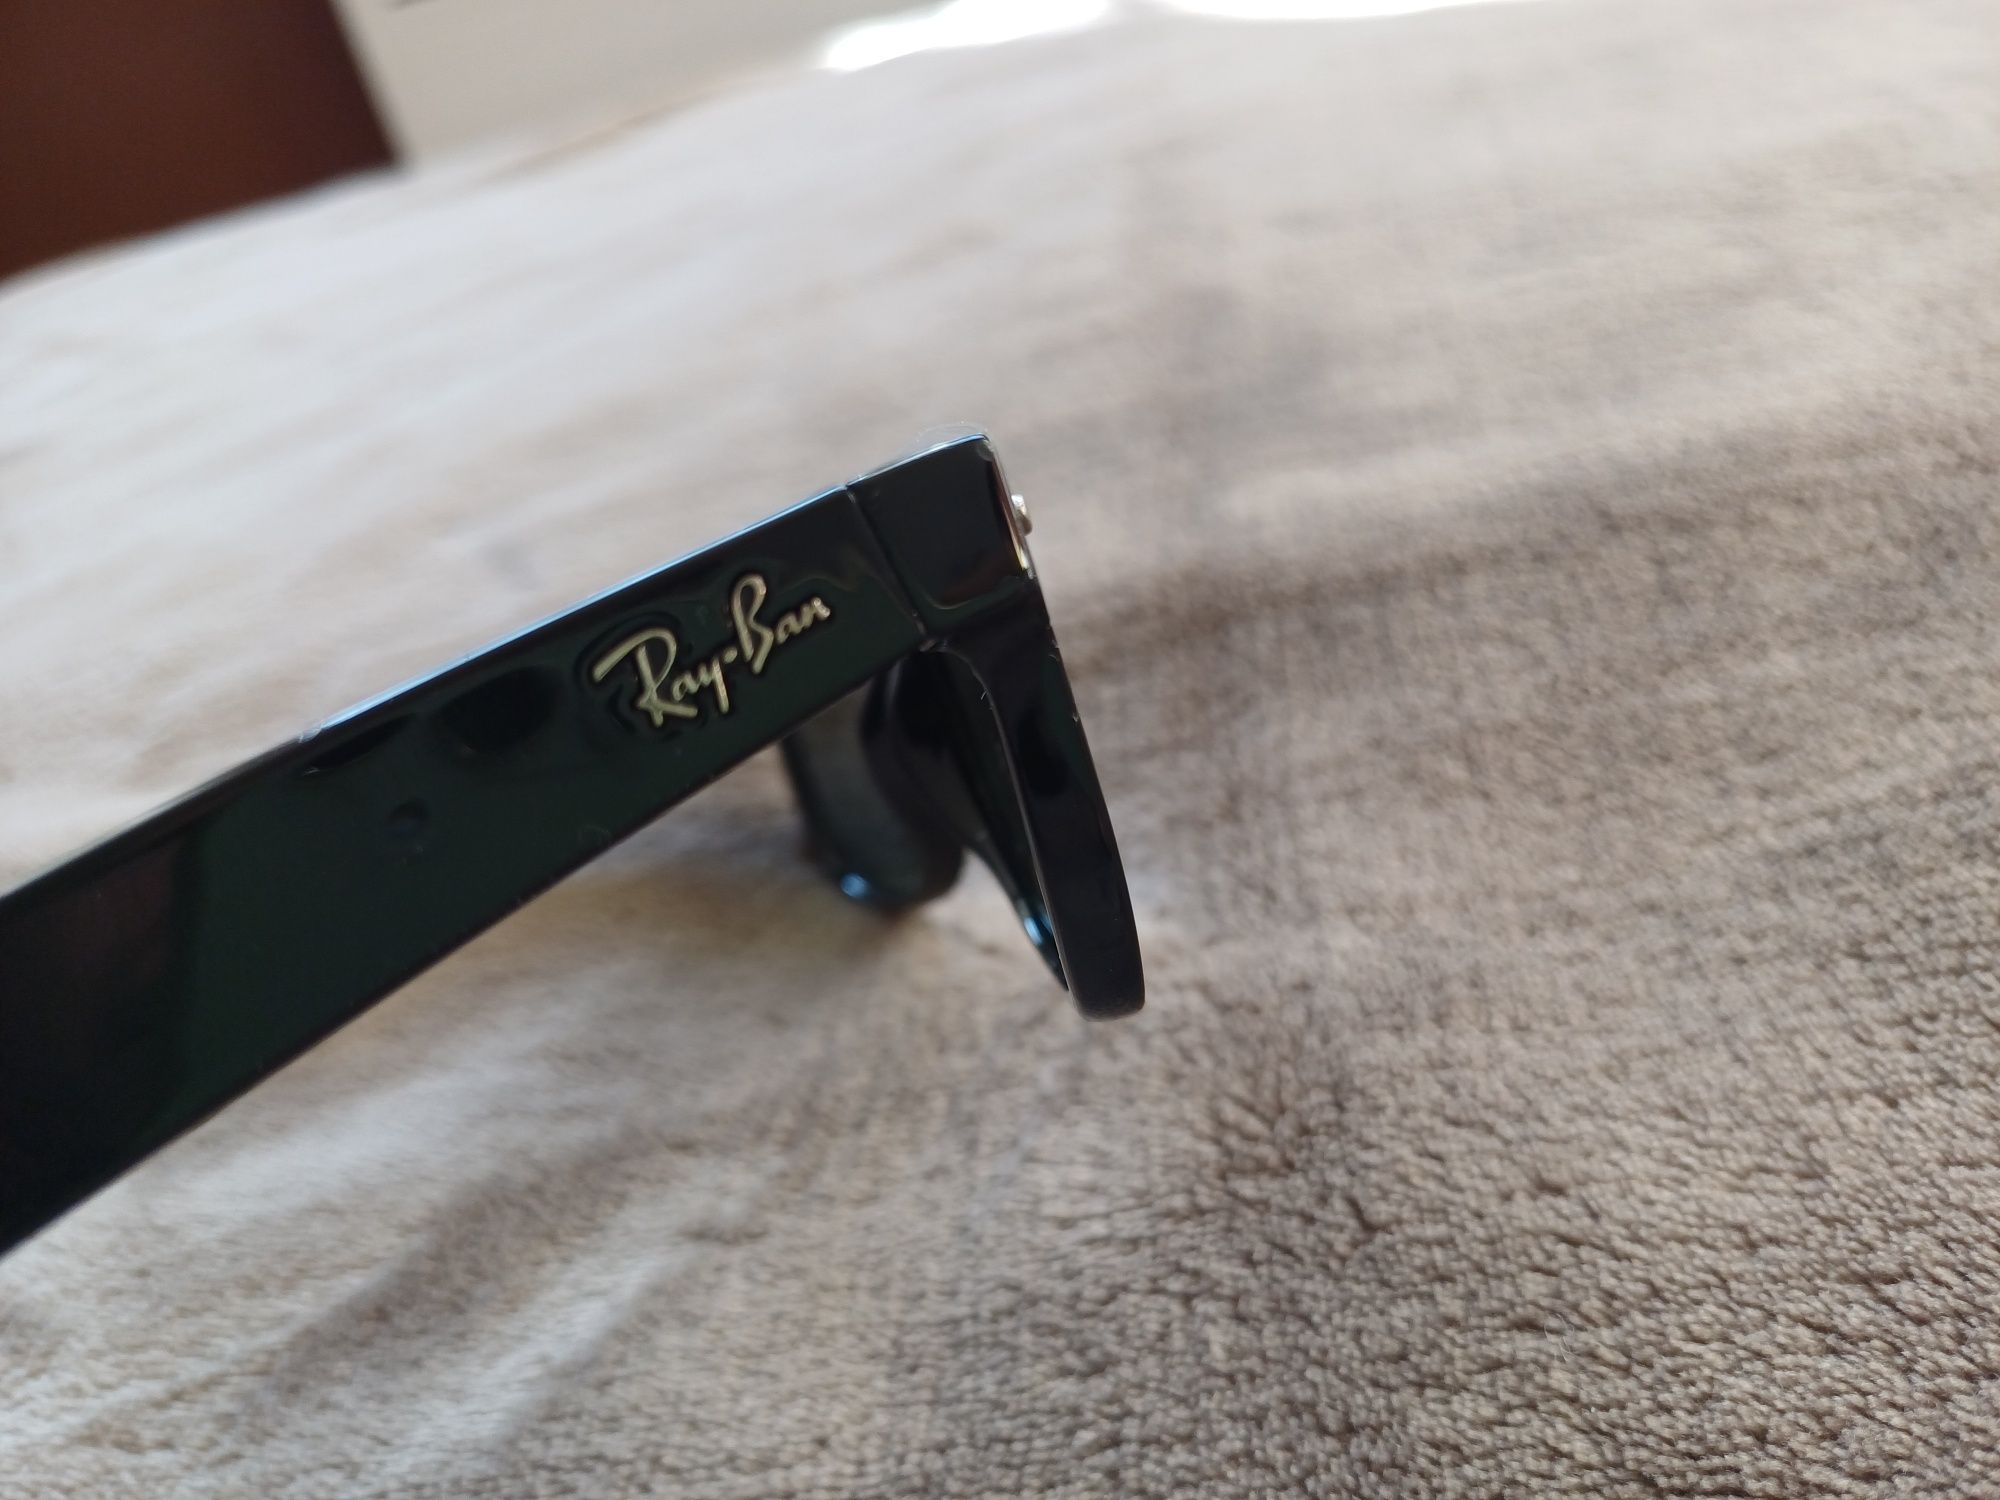 Ray Ban Слънчеви дамски очила 2132
Wayfarer Classic RB4106.rb